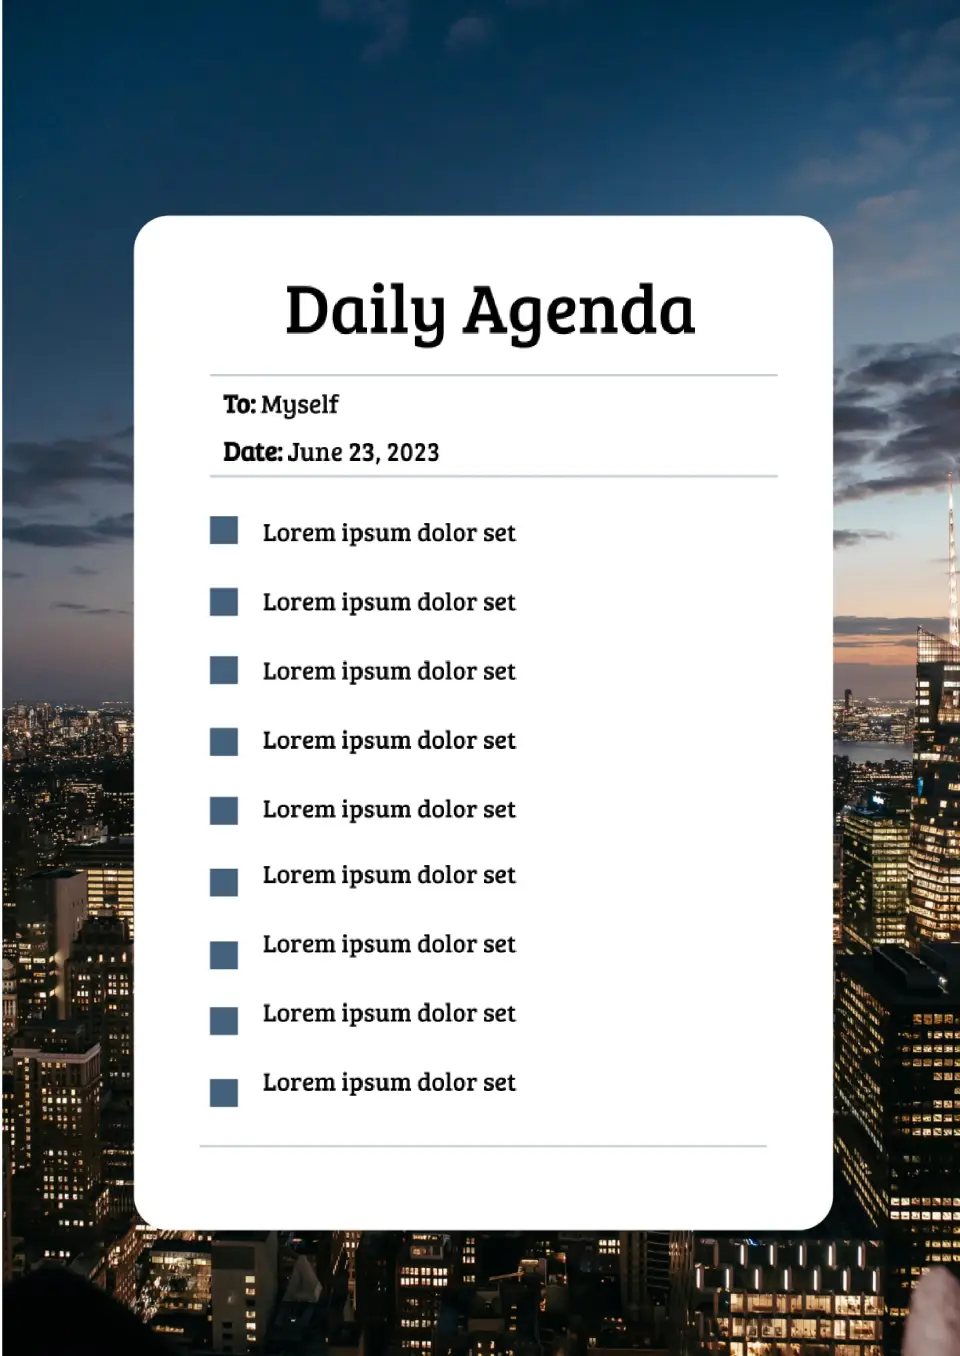 Daily Agenda Template for Google Docs